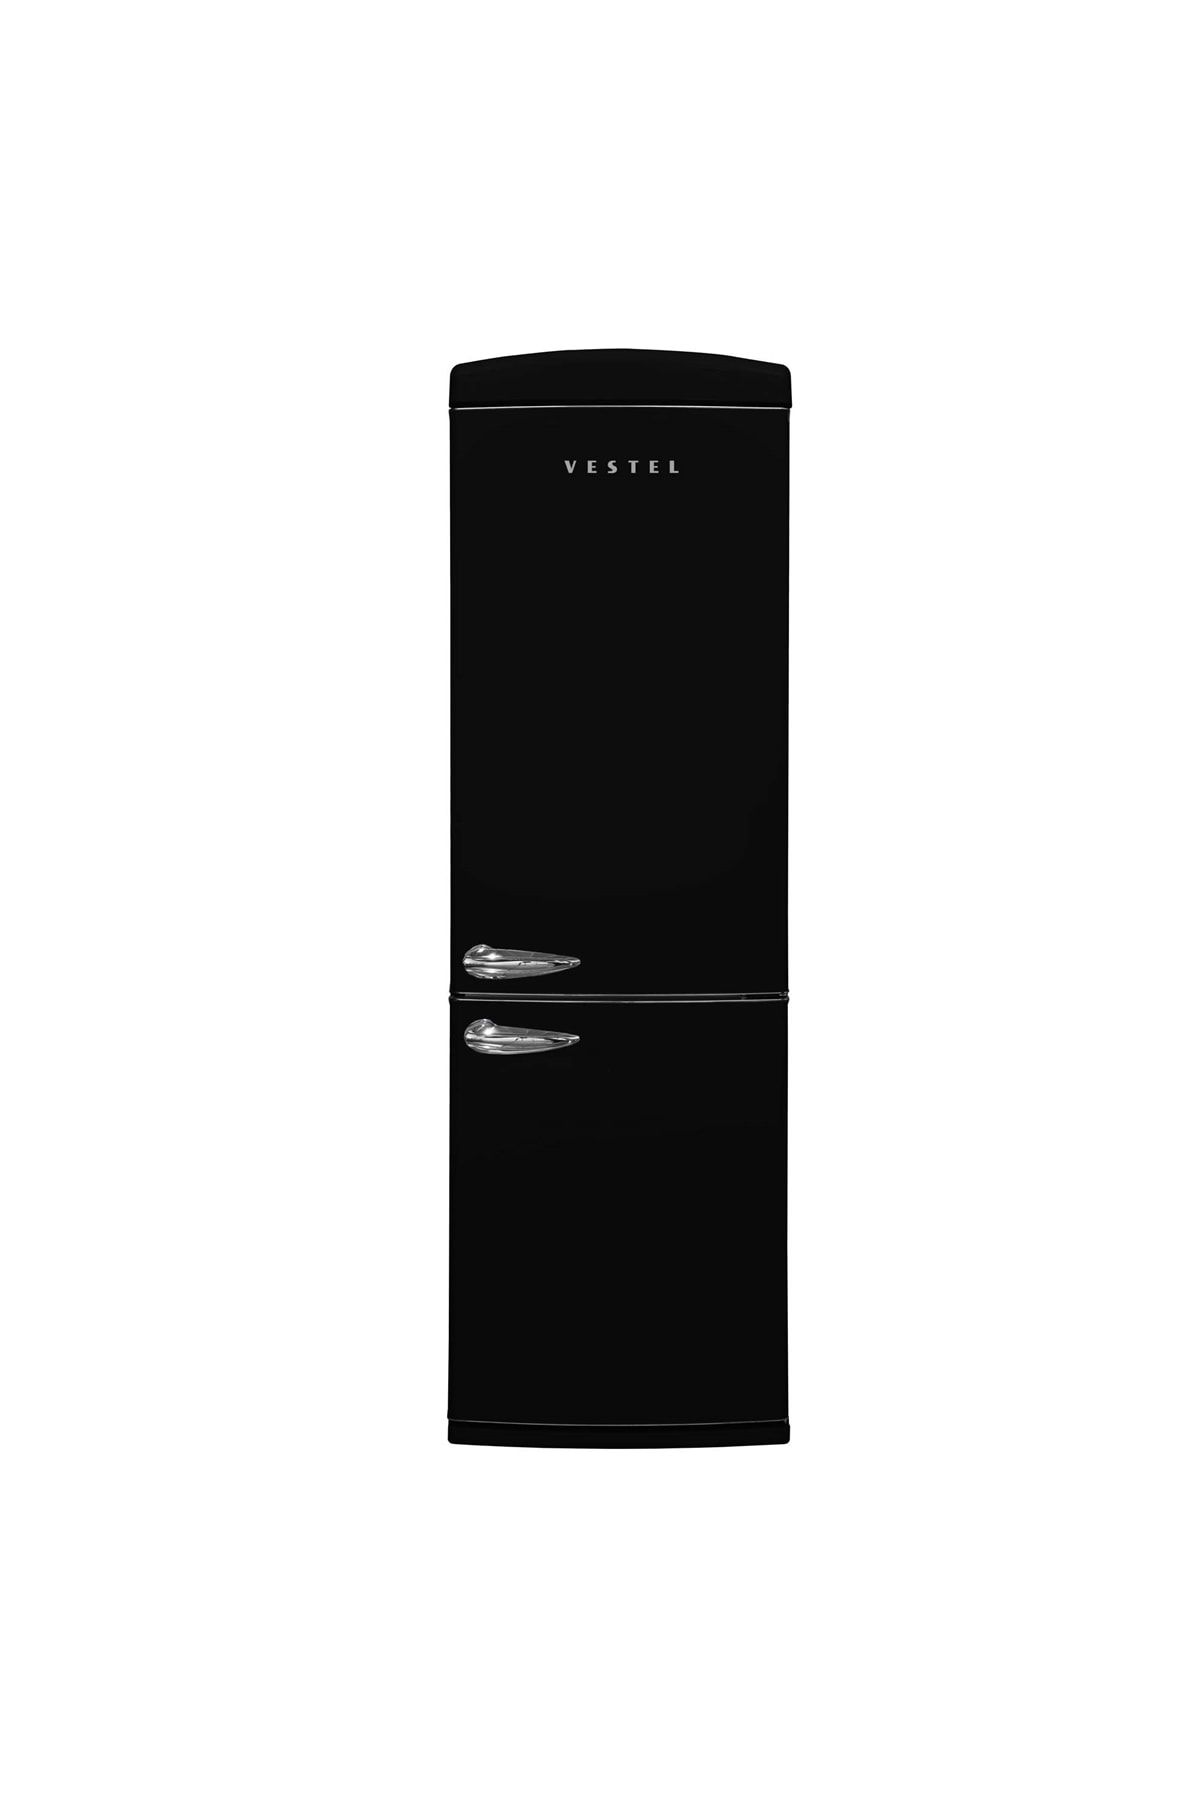 VESTEL Retro Nfk37101 Siyah No-frost Buzdolabı